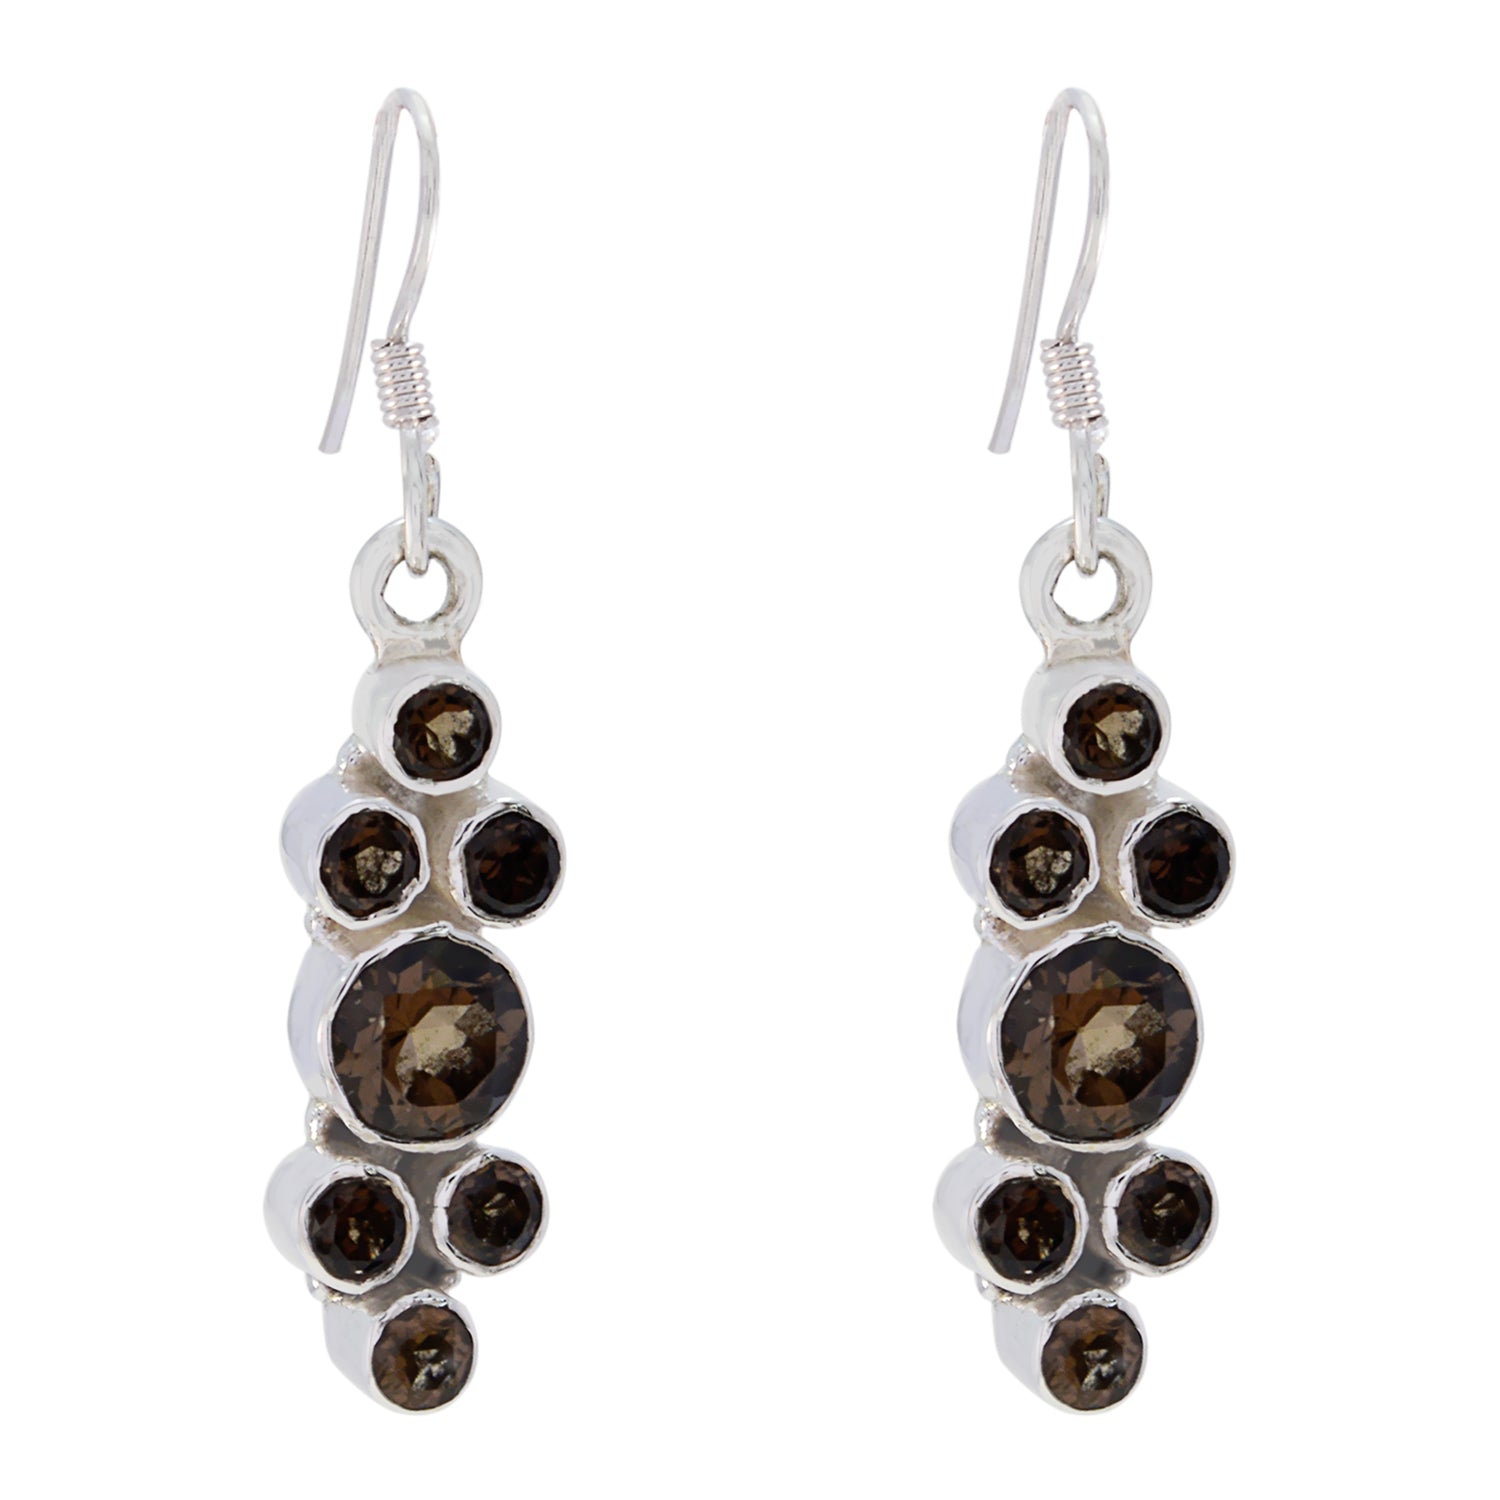 Riyo Good Gemstones round Faceted Brown Smokey Quartz Silver Earrings gift for mom